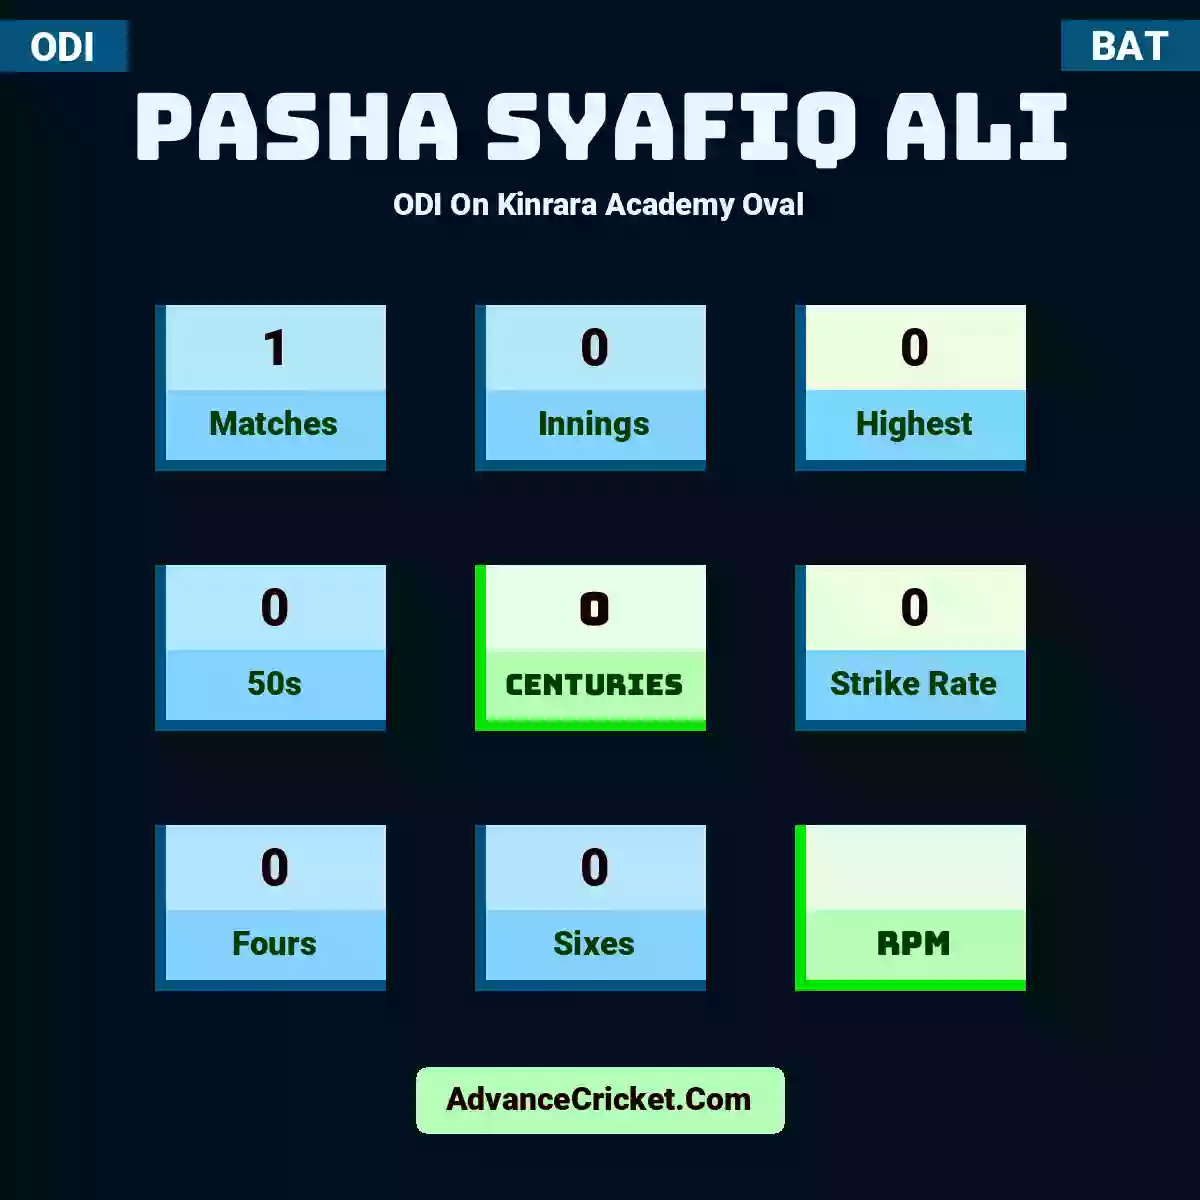 Pasha Syafiq Ali ODI  On Kinrara Academy Oval, Pasha Syafiq Ali played 1 matches, scored 0 runs as highest, 0 half-centuries, and 0 centuries, with a strike rate of 0. P.Ali hit 0 fours and 0 sixes.